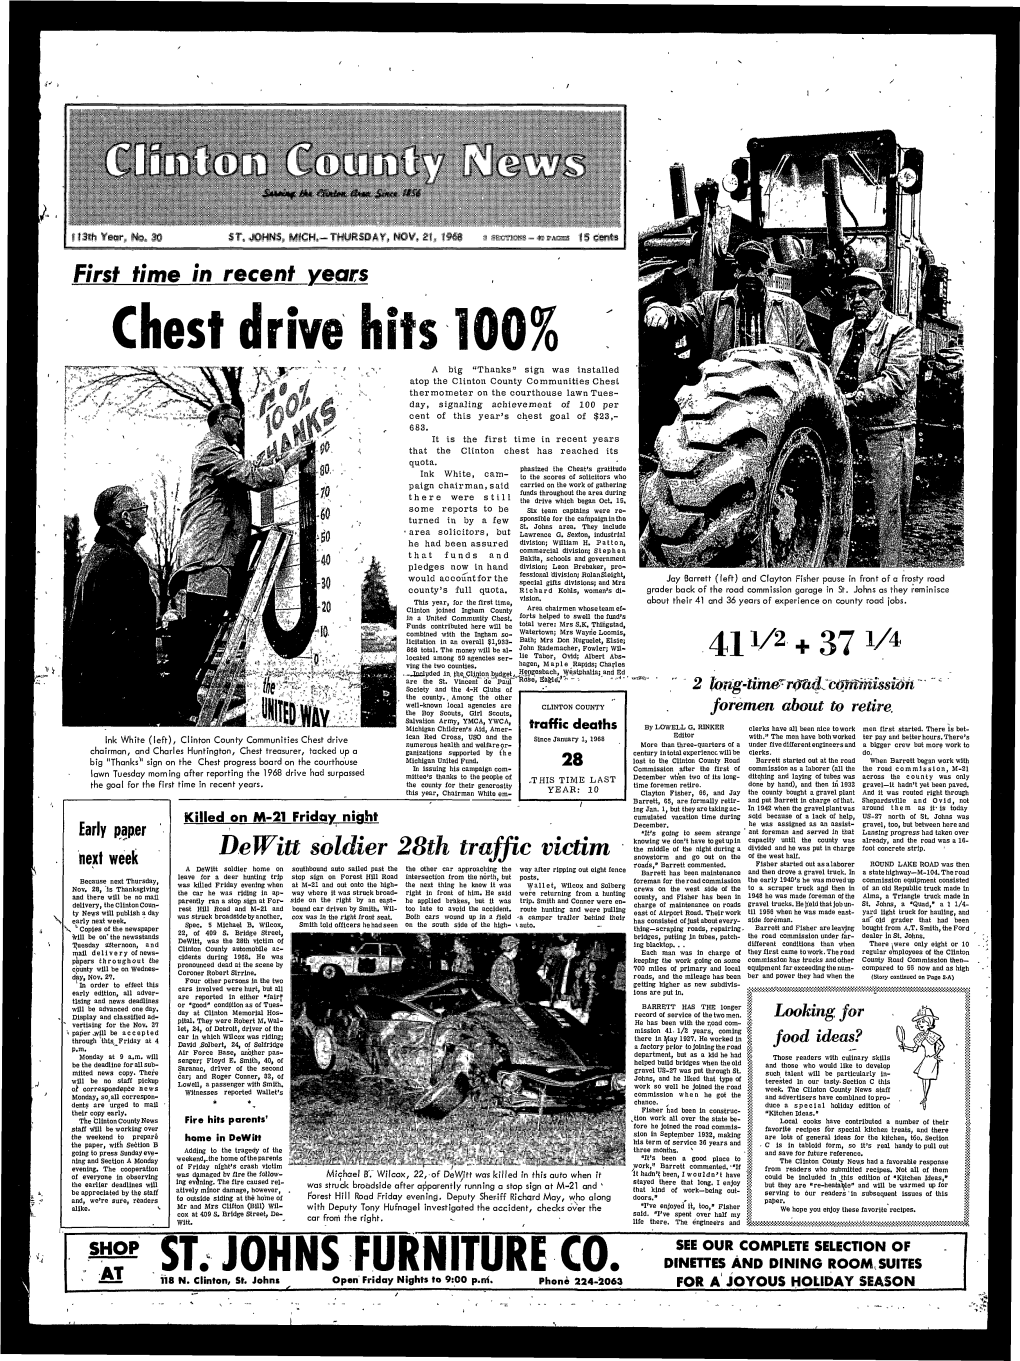 November 21, 1968 CLINTON COUNTY NEWS, St